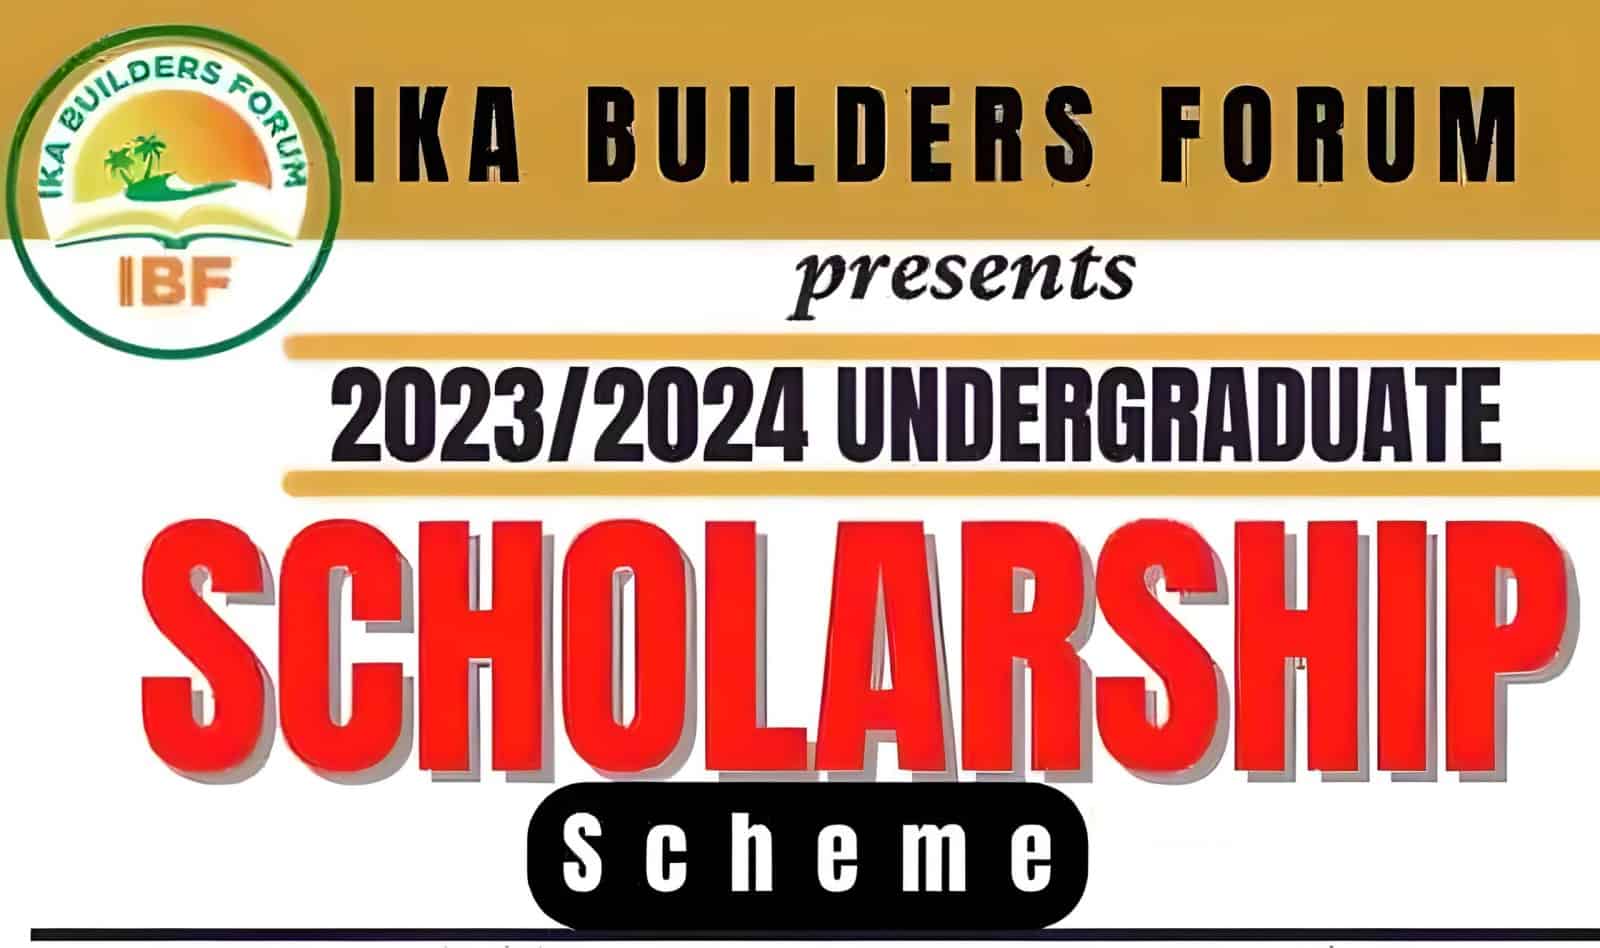 Ika Builders Forum Undergraduate Scholarship 